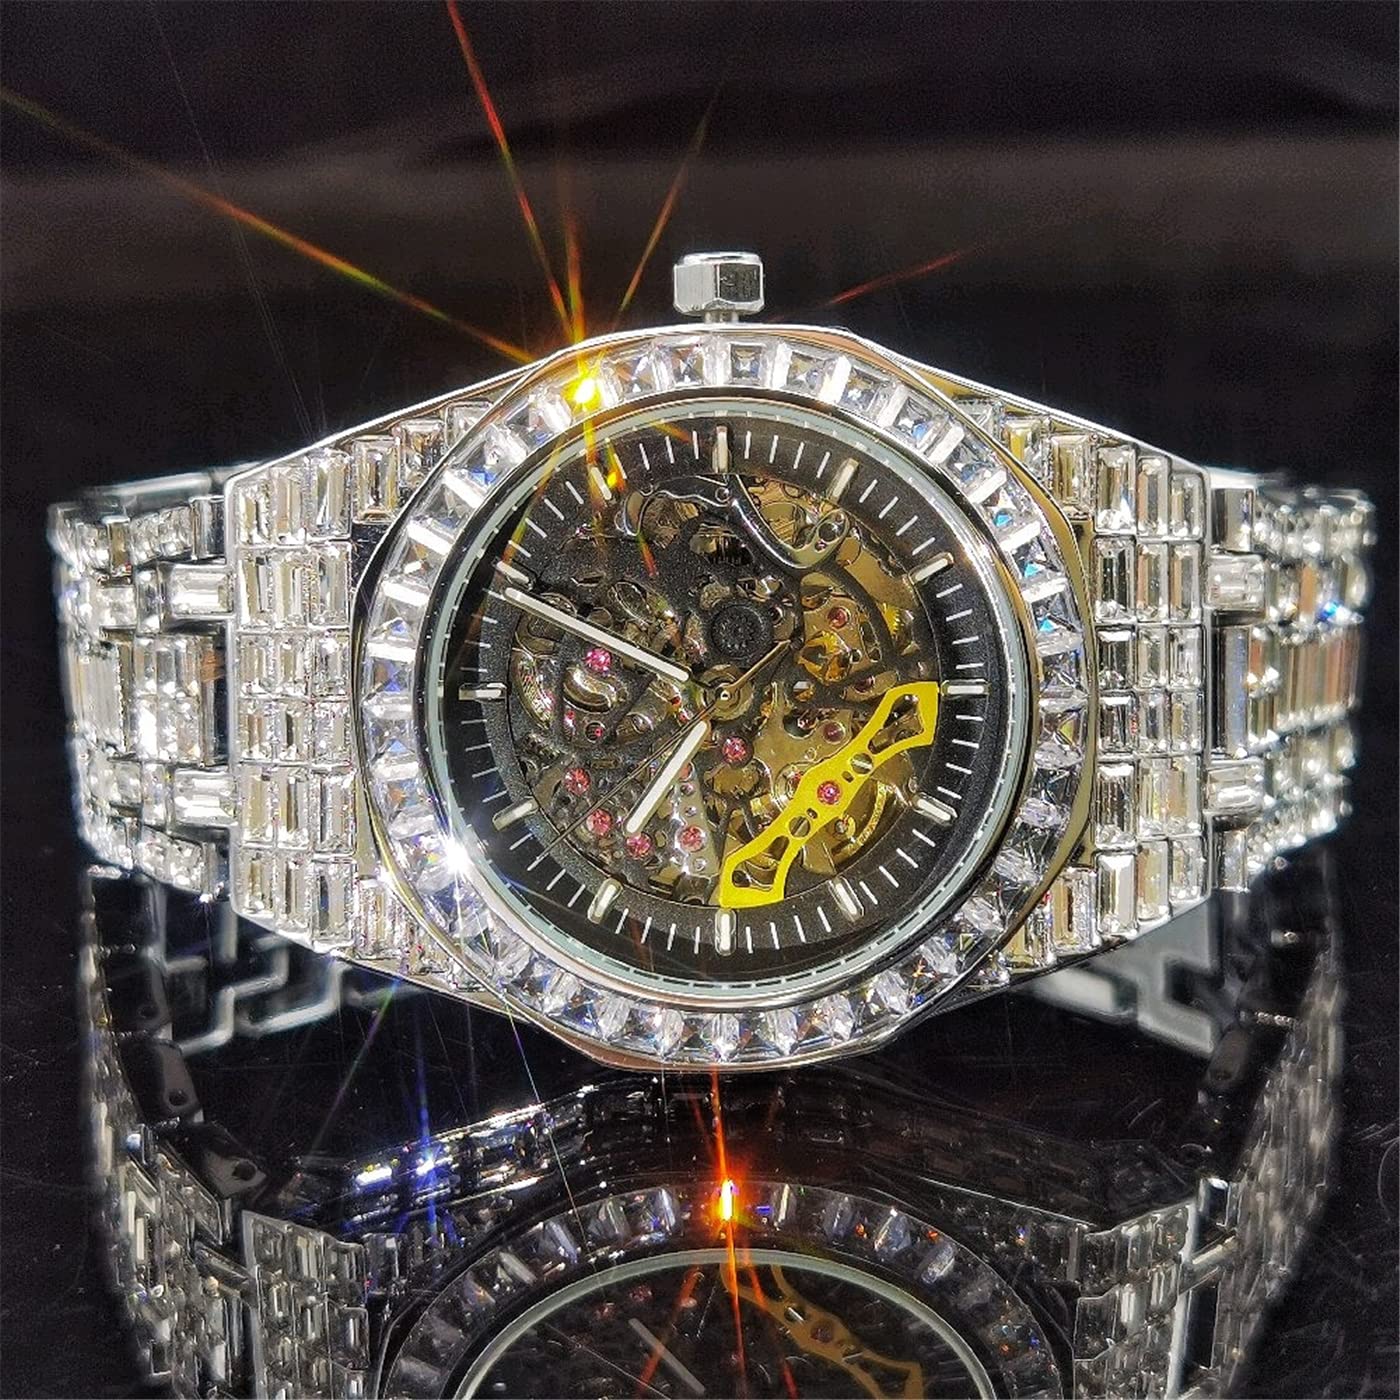 ICEDIAMOND Herren 39MM Mode Durchbrochene Handaufzug Mechanische Armbanduhr, Full Pave Funkelnde Baguette Zirkonia simulierte Diamanten, Luxus Skelett Runde Zifferblatt Uhr